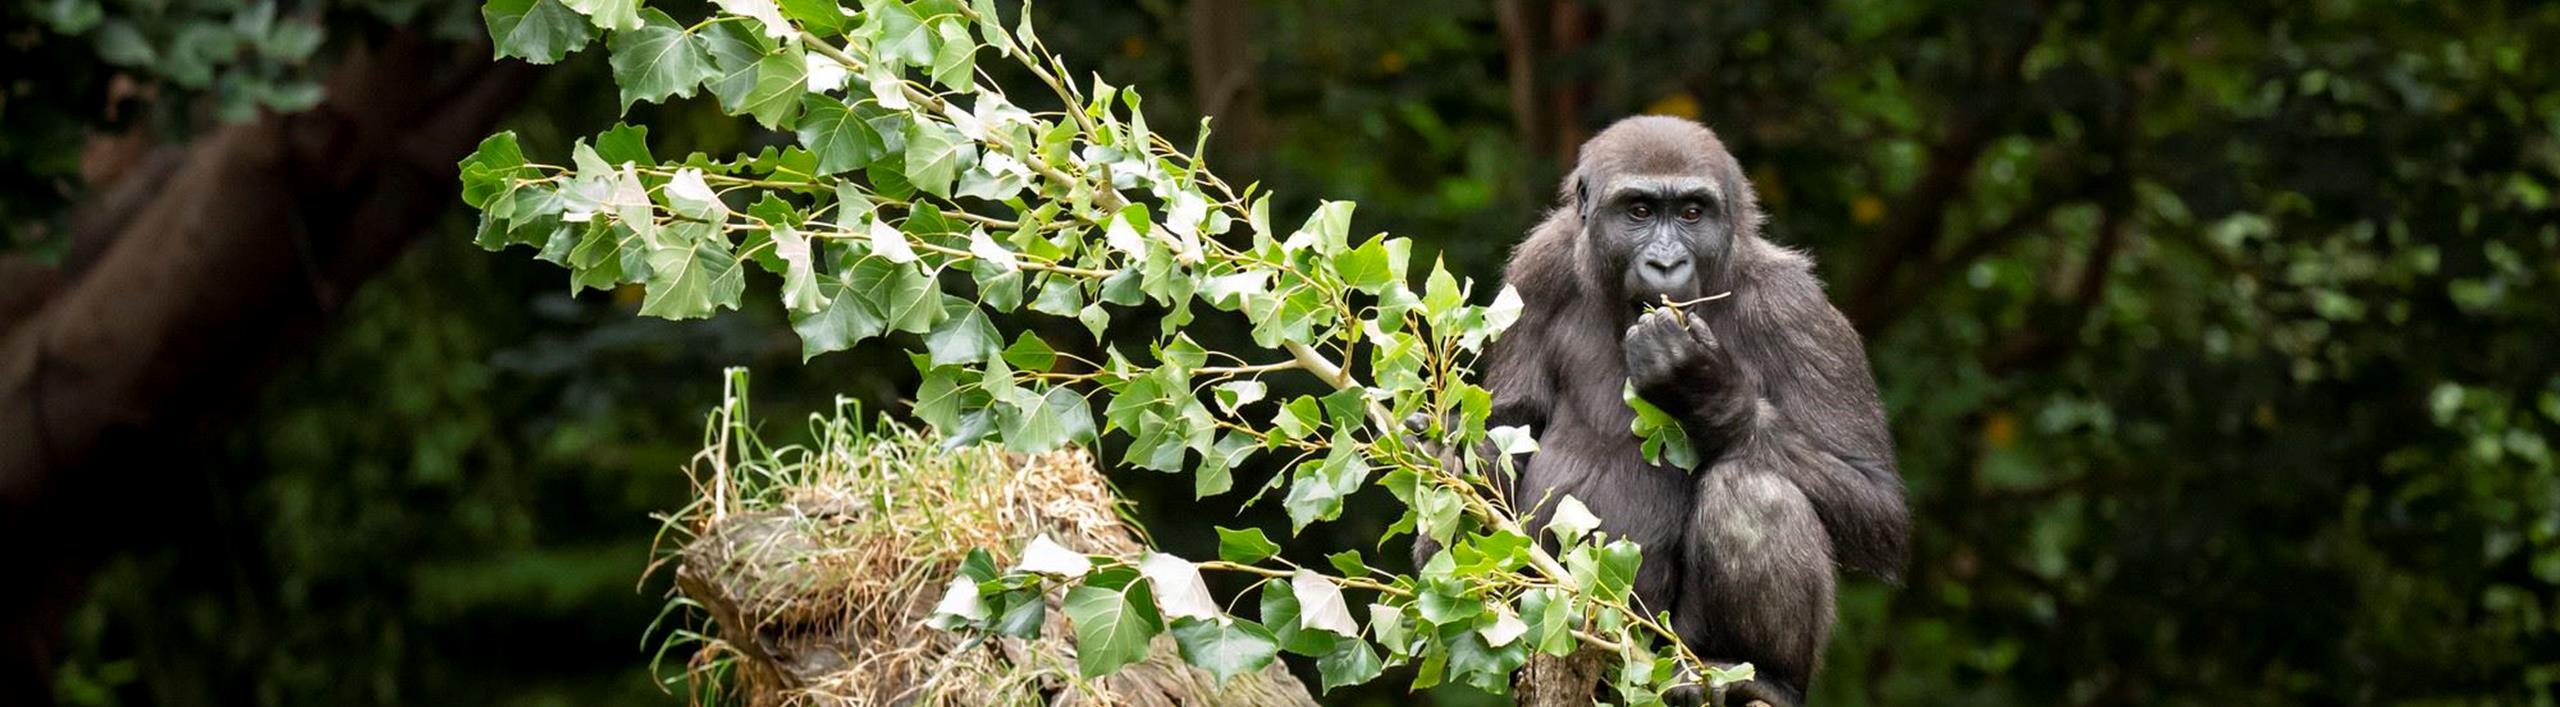 Western Lowland Gorilla sitting on tree branch.